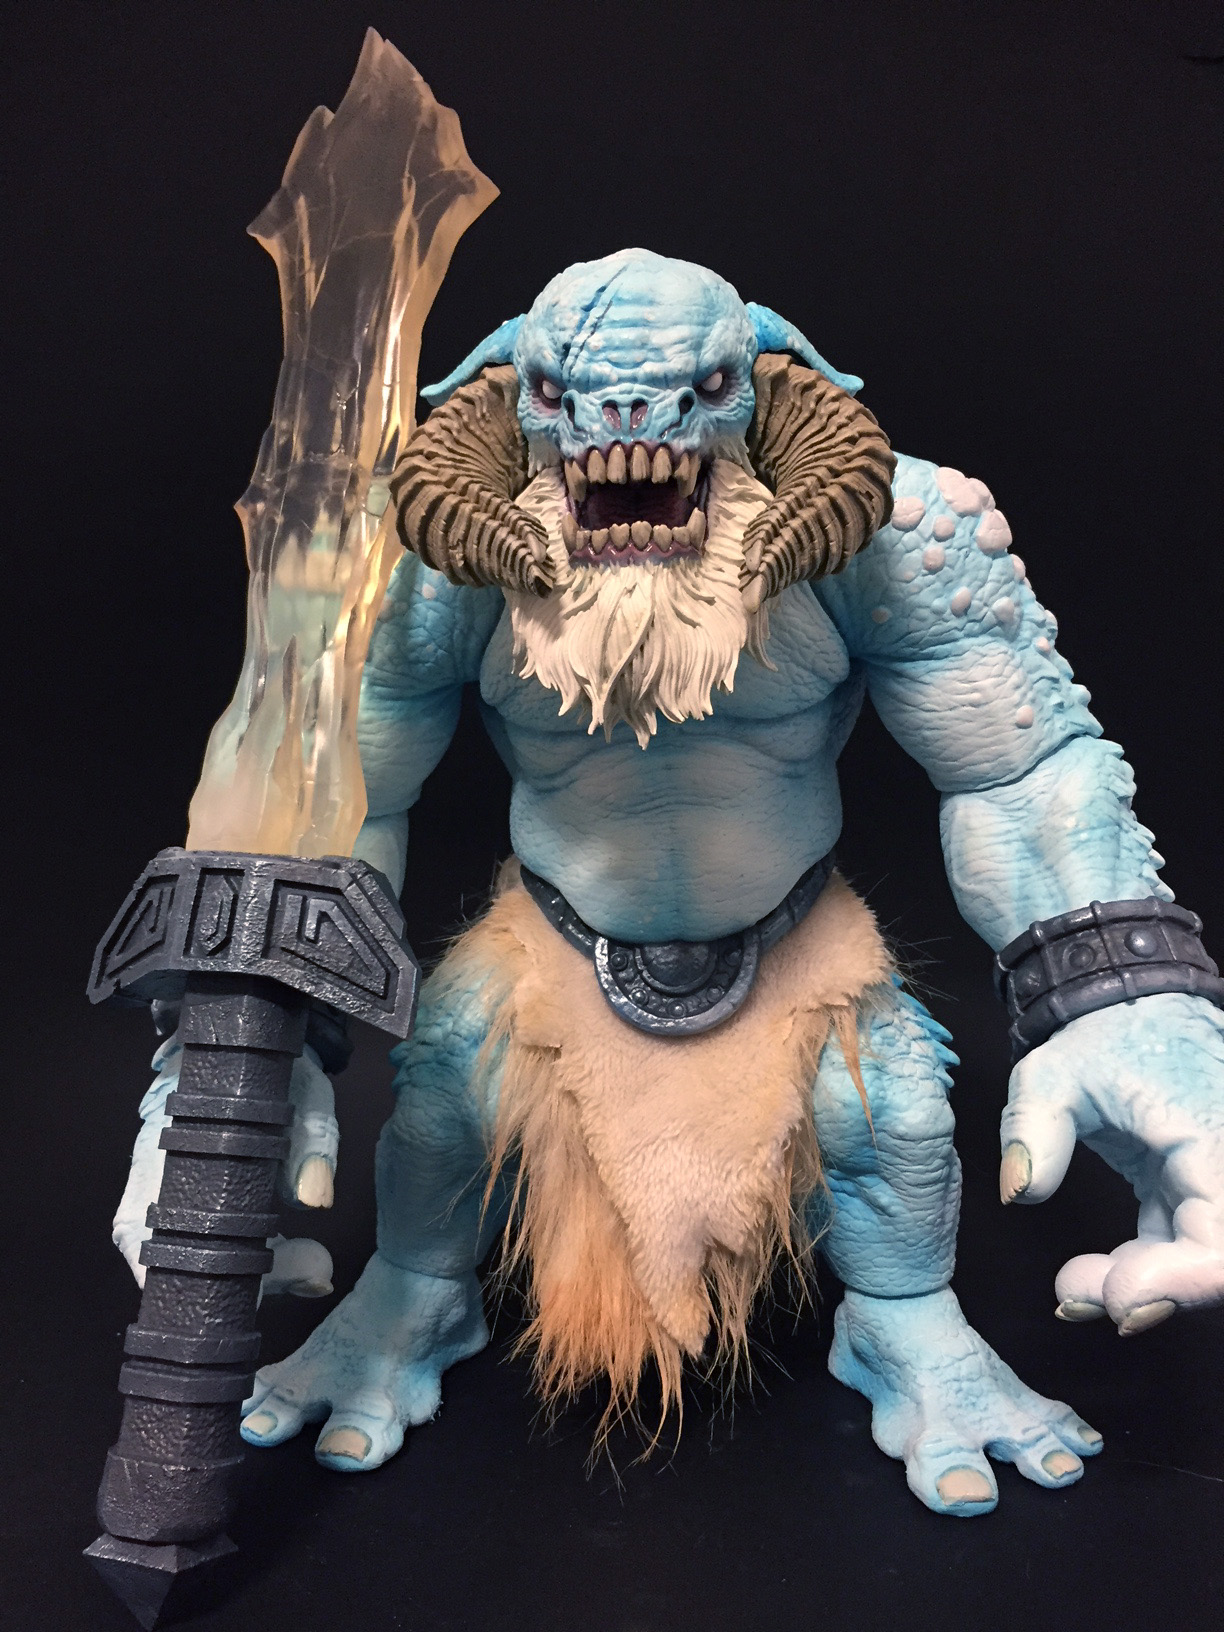 Ice Troll - Mythic Legions action figure from Four Horsemen Studios